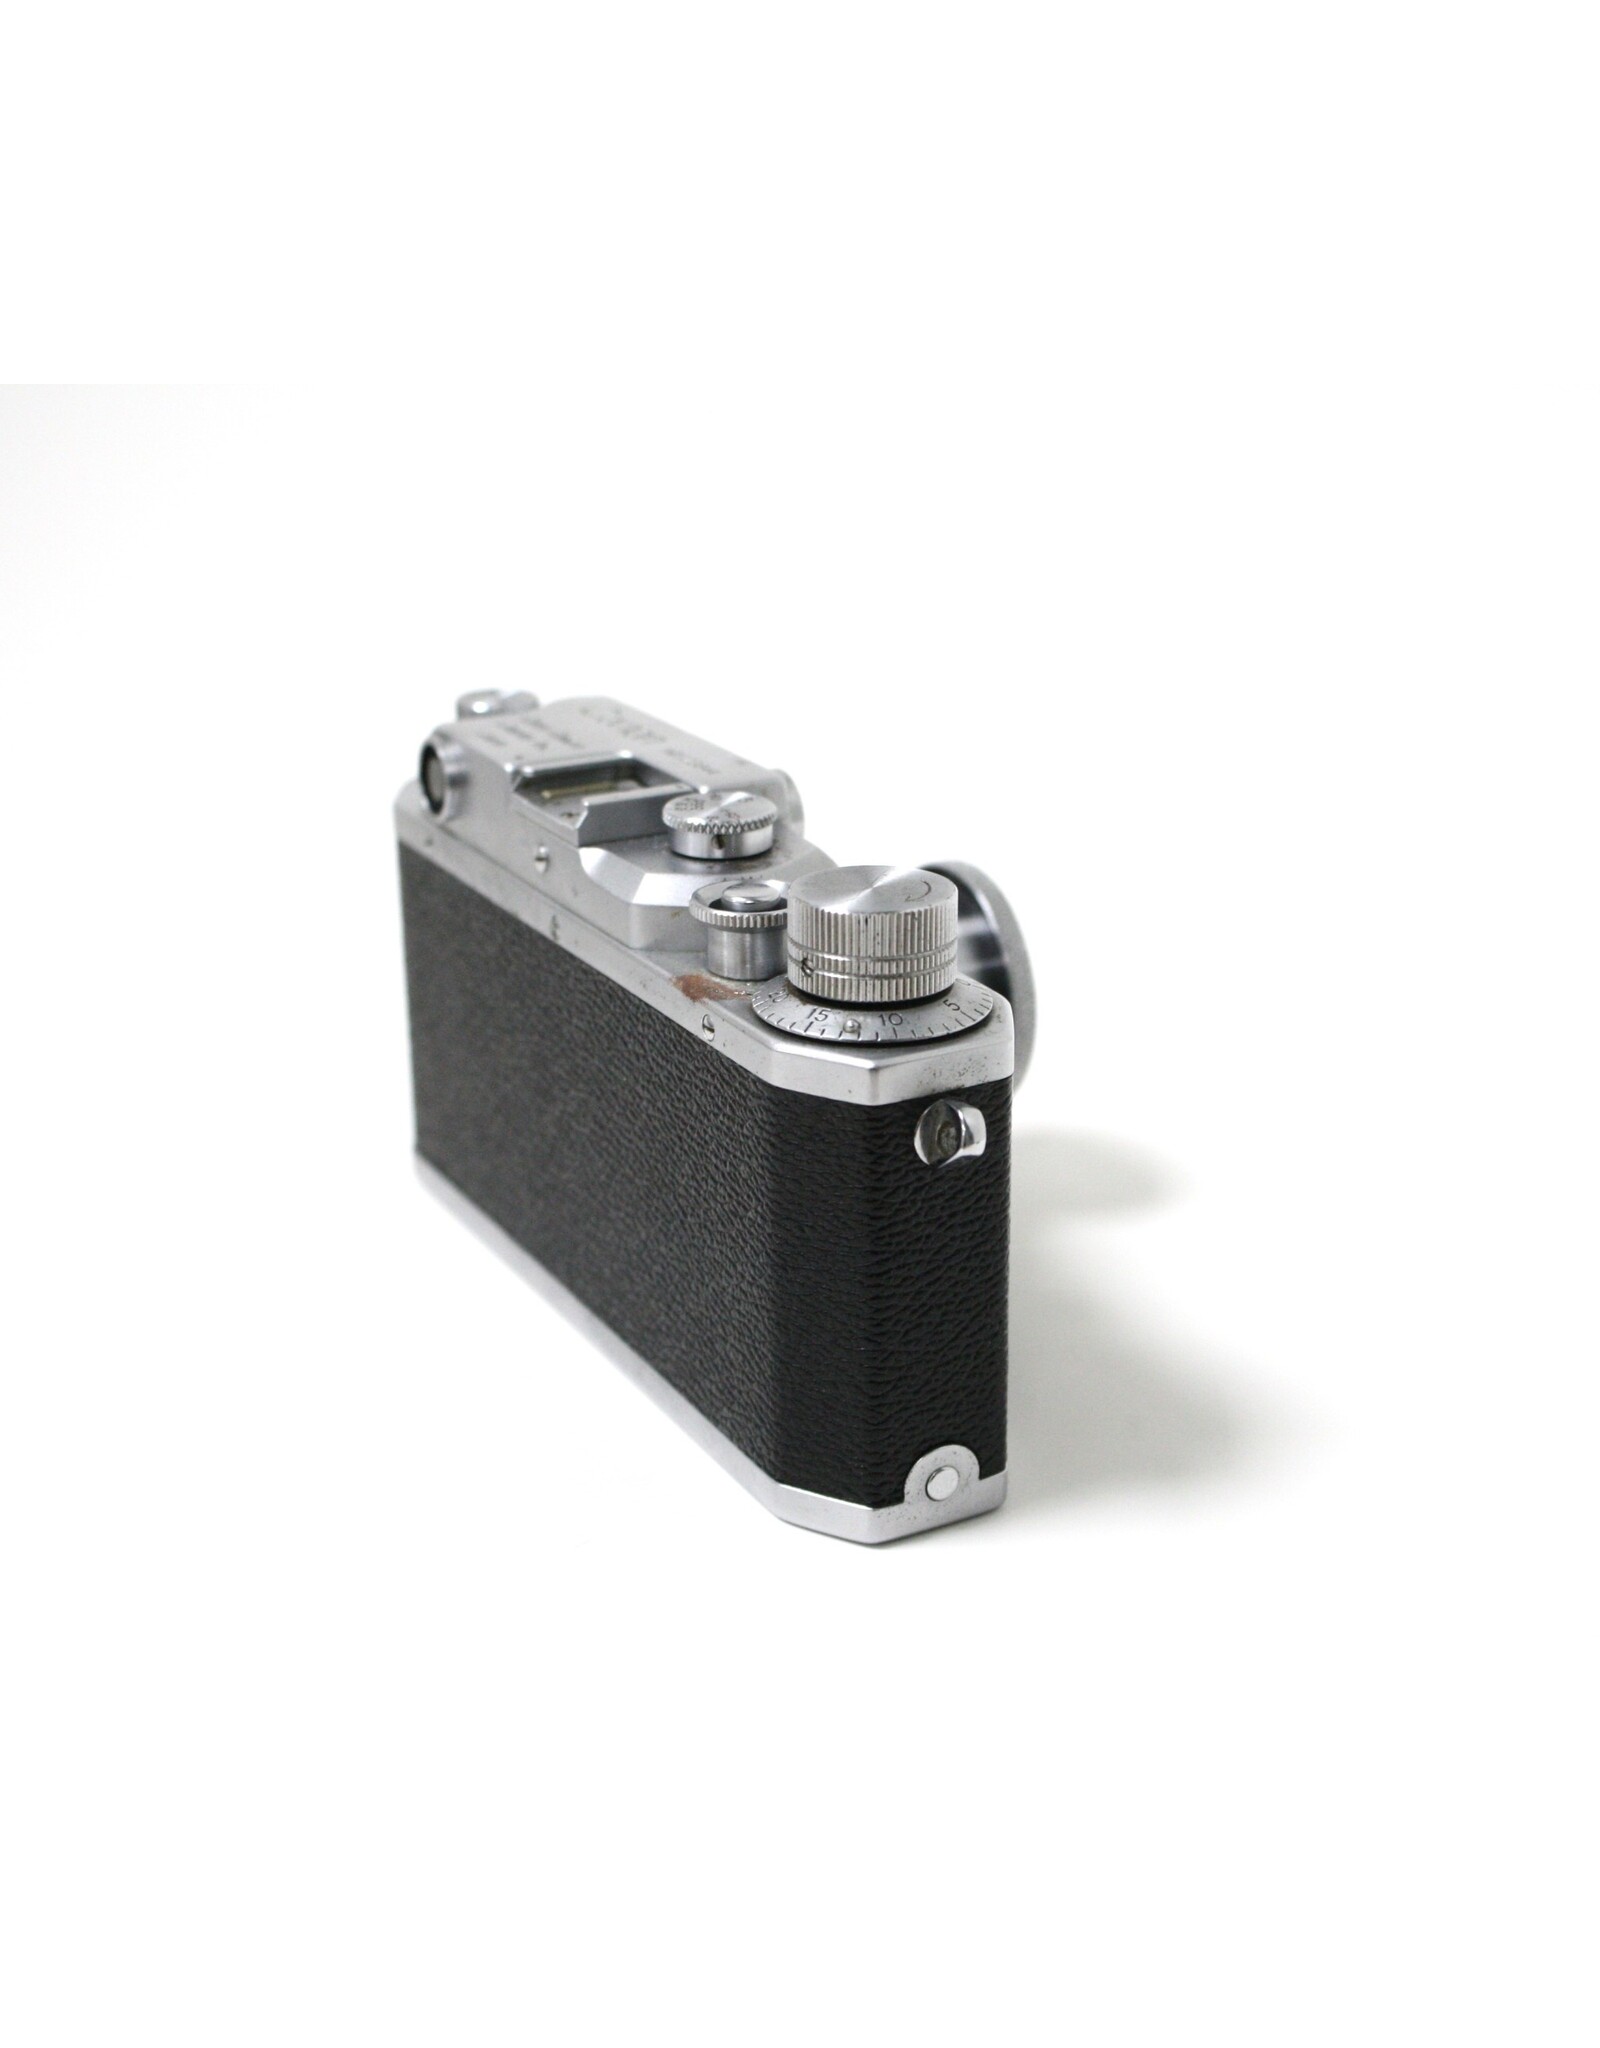 Canon Canon IV 35mm Rangefinder Film Camera with Tokyo Simlar lens 50mm 5cm F/3.5 LTM Leica Screw Mount